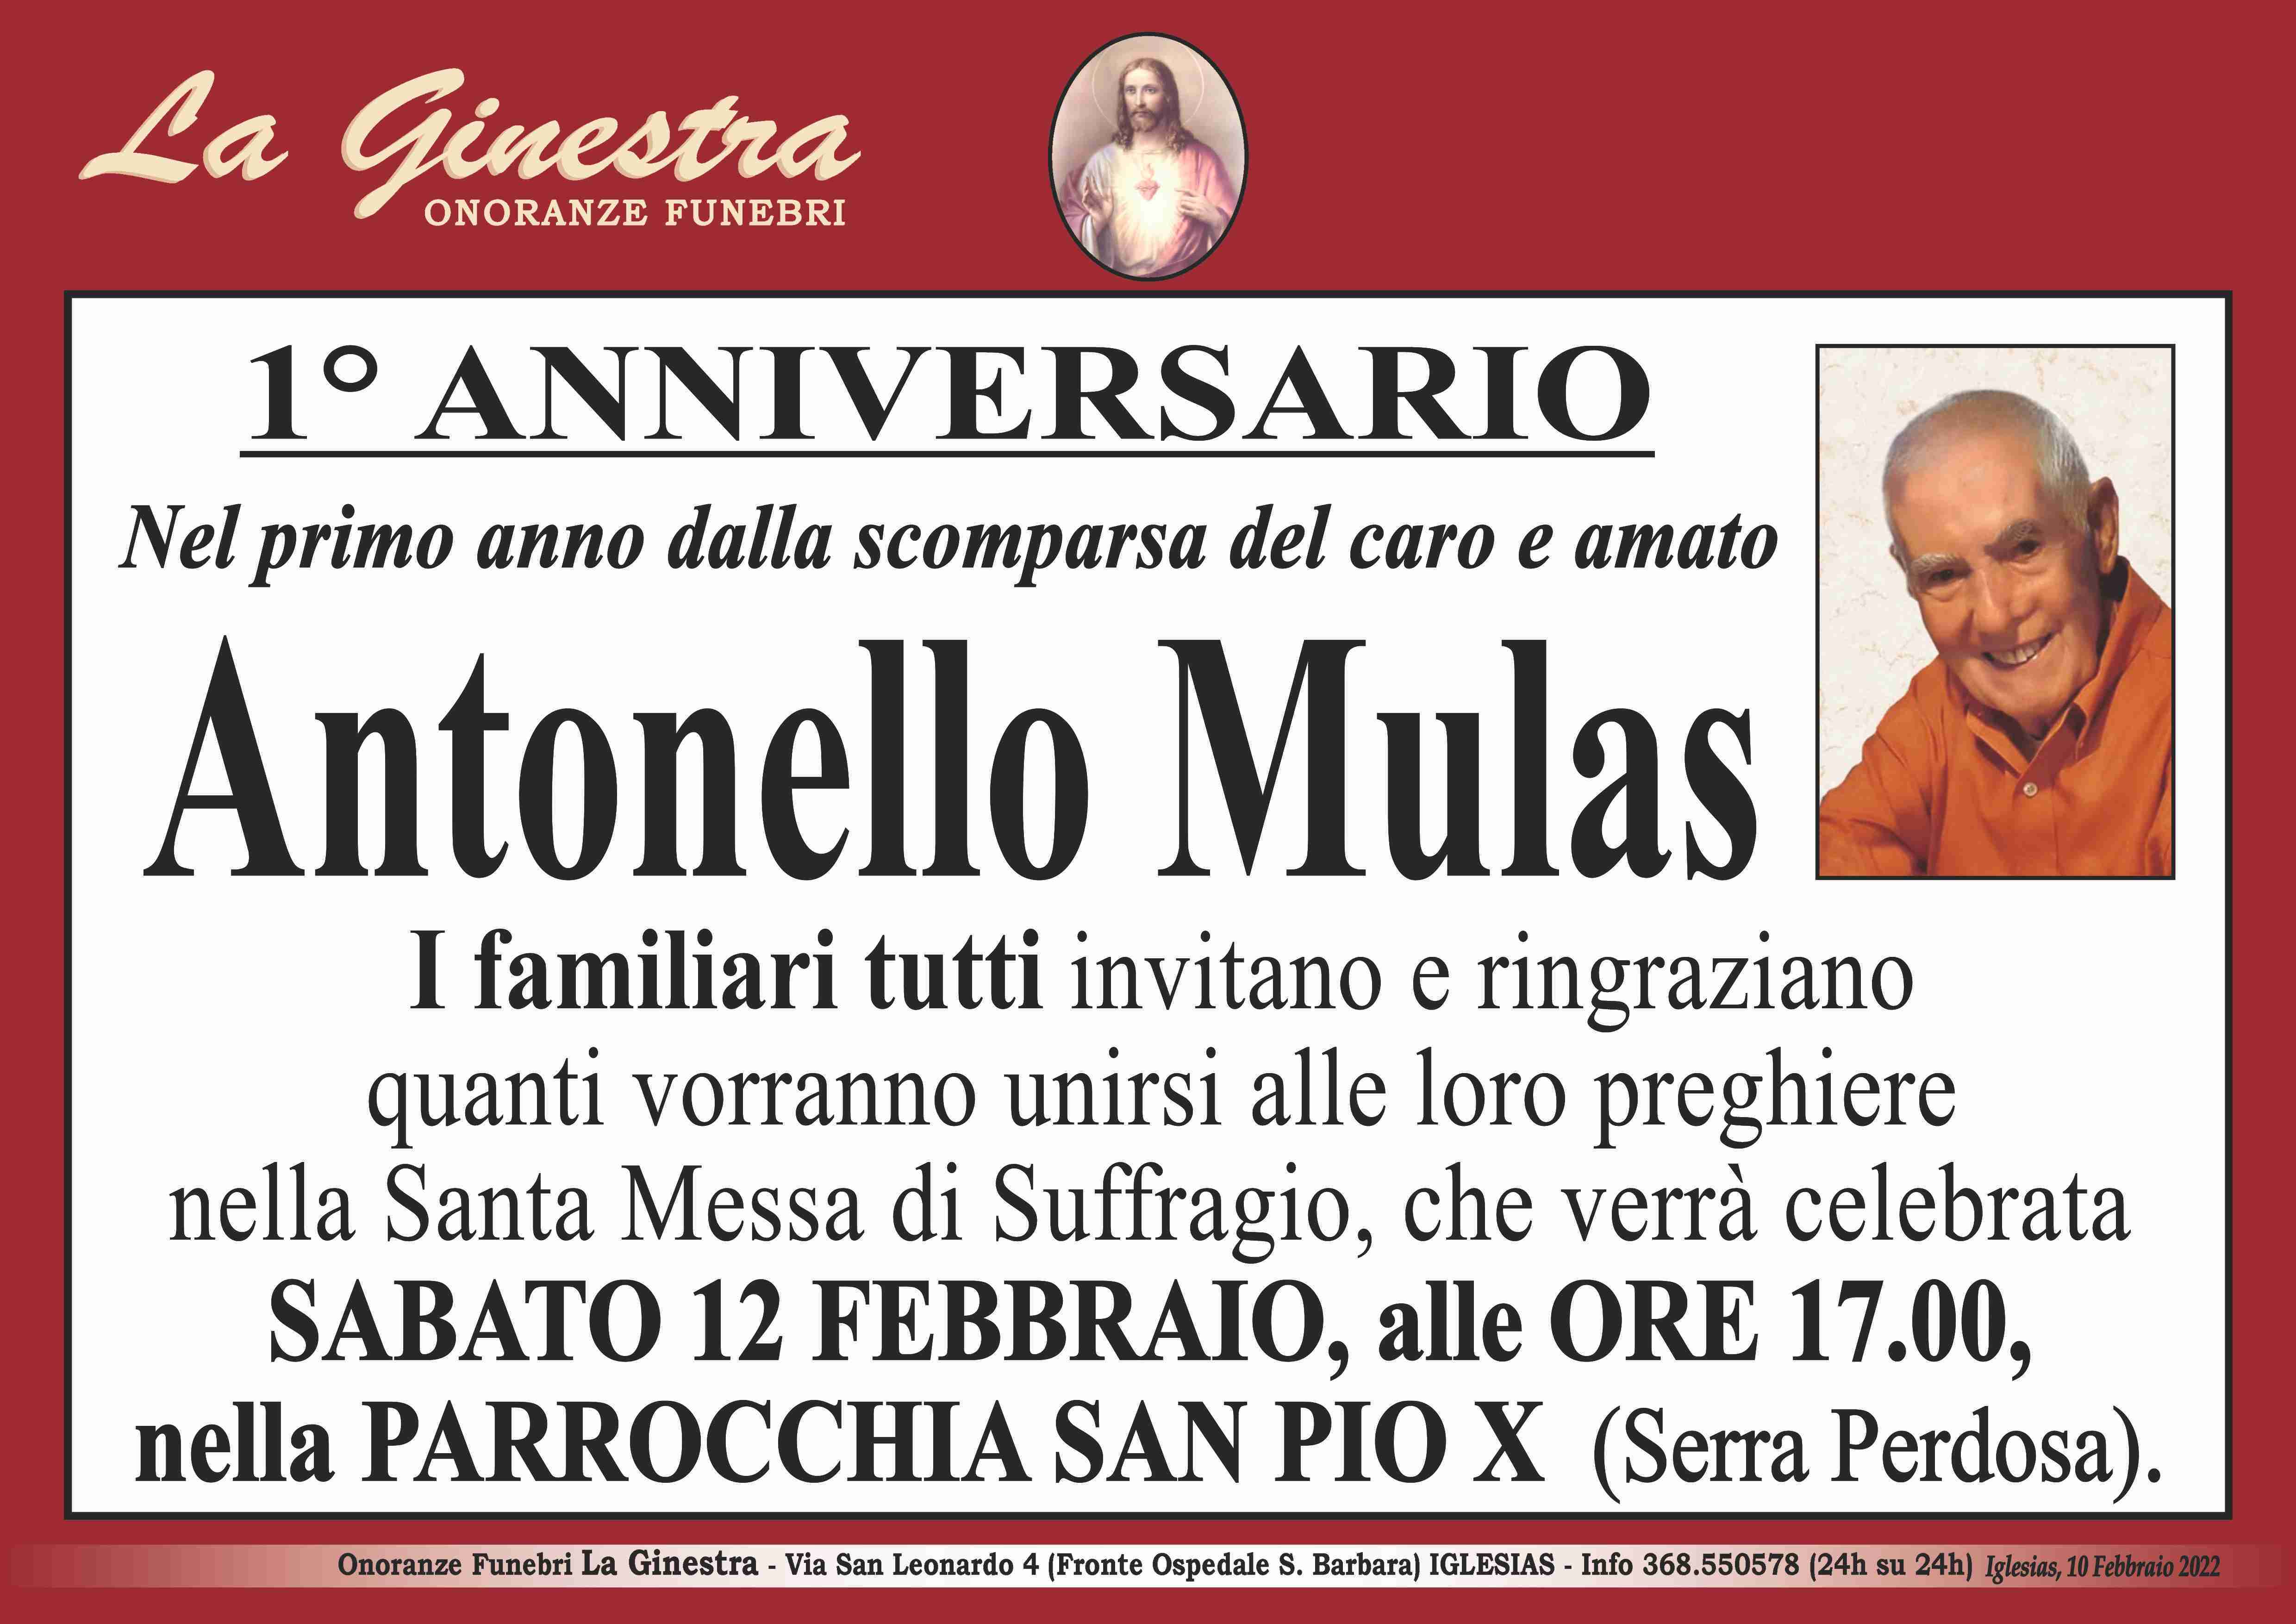 Antonello Mulas